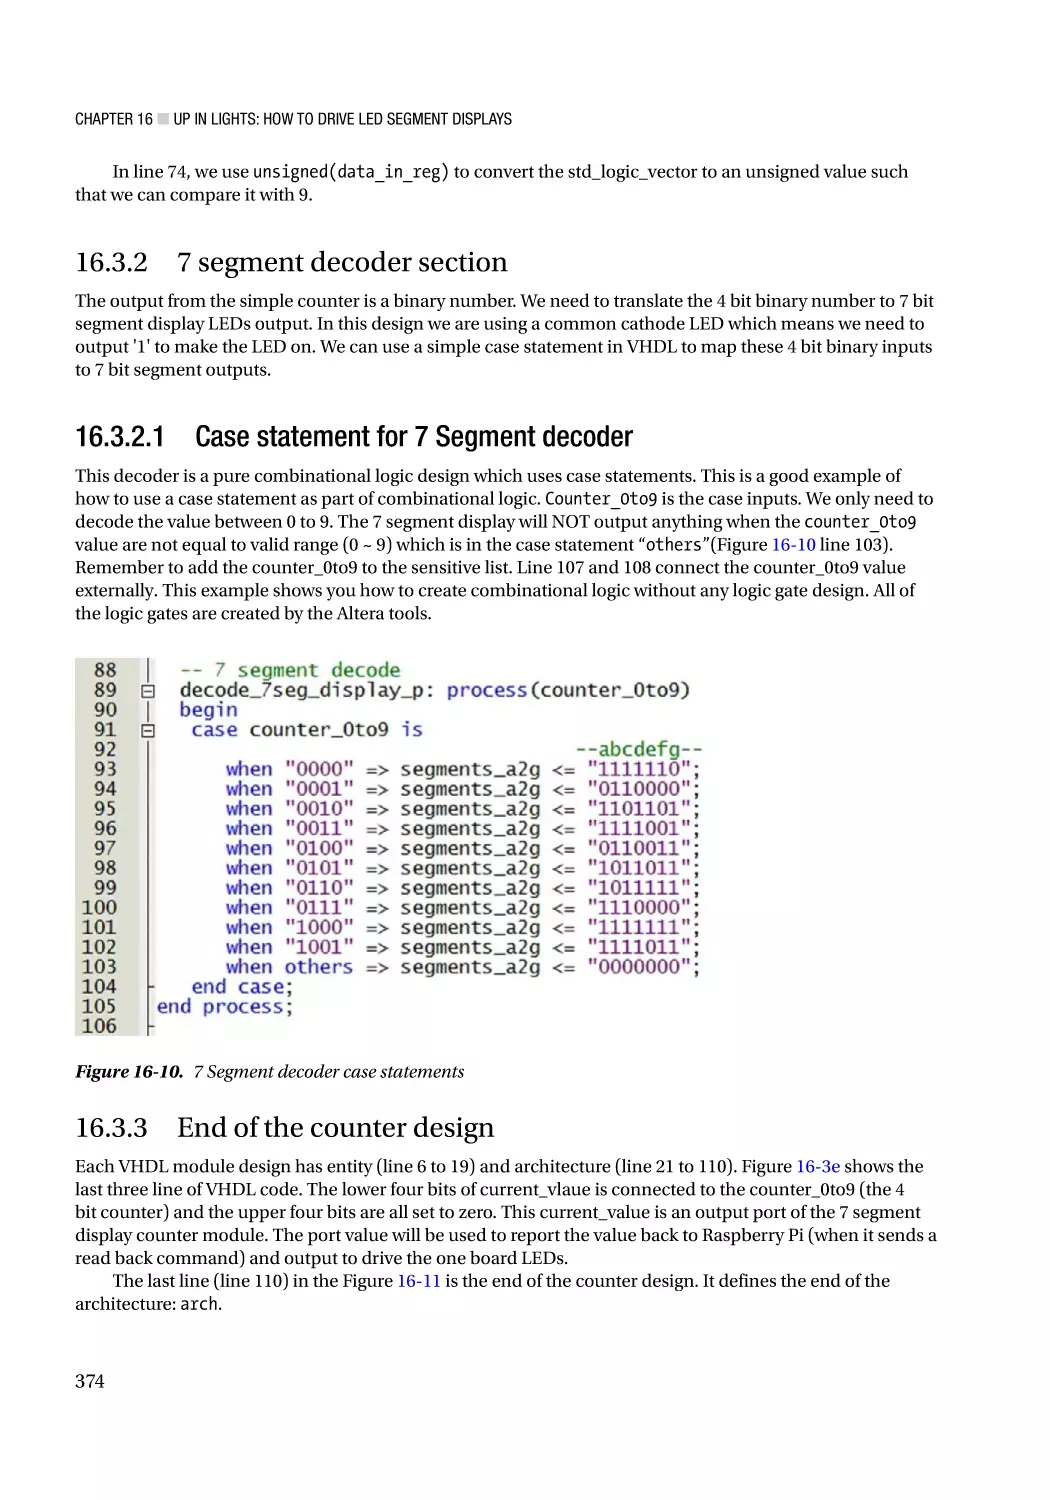 16.3.2 7 segment decoder section
16.3.2.1 Case statement for 7 Segment decoder
16.3.3 End of the counter design